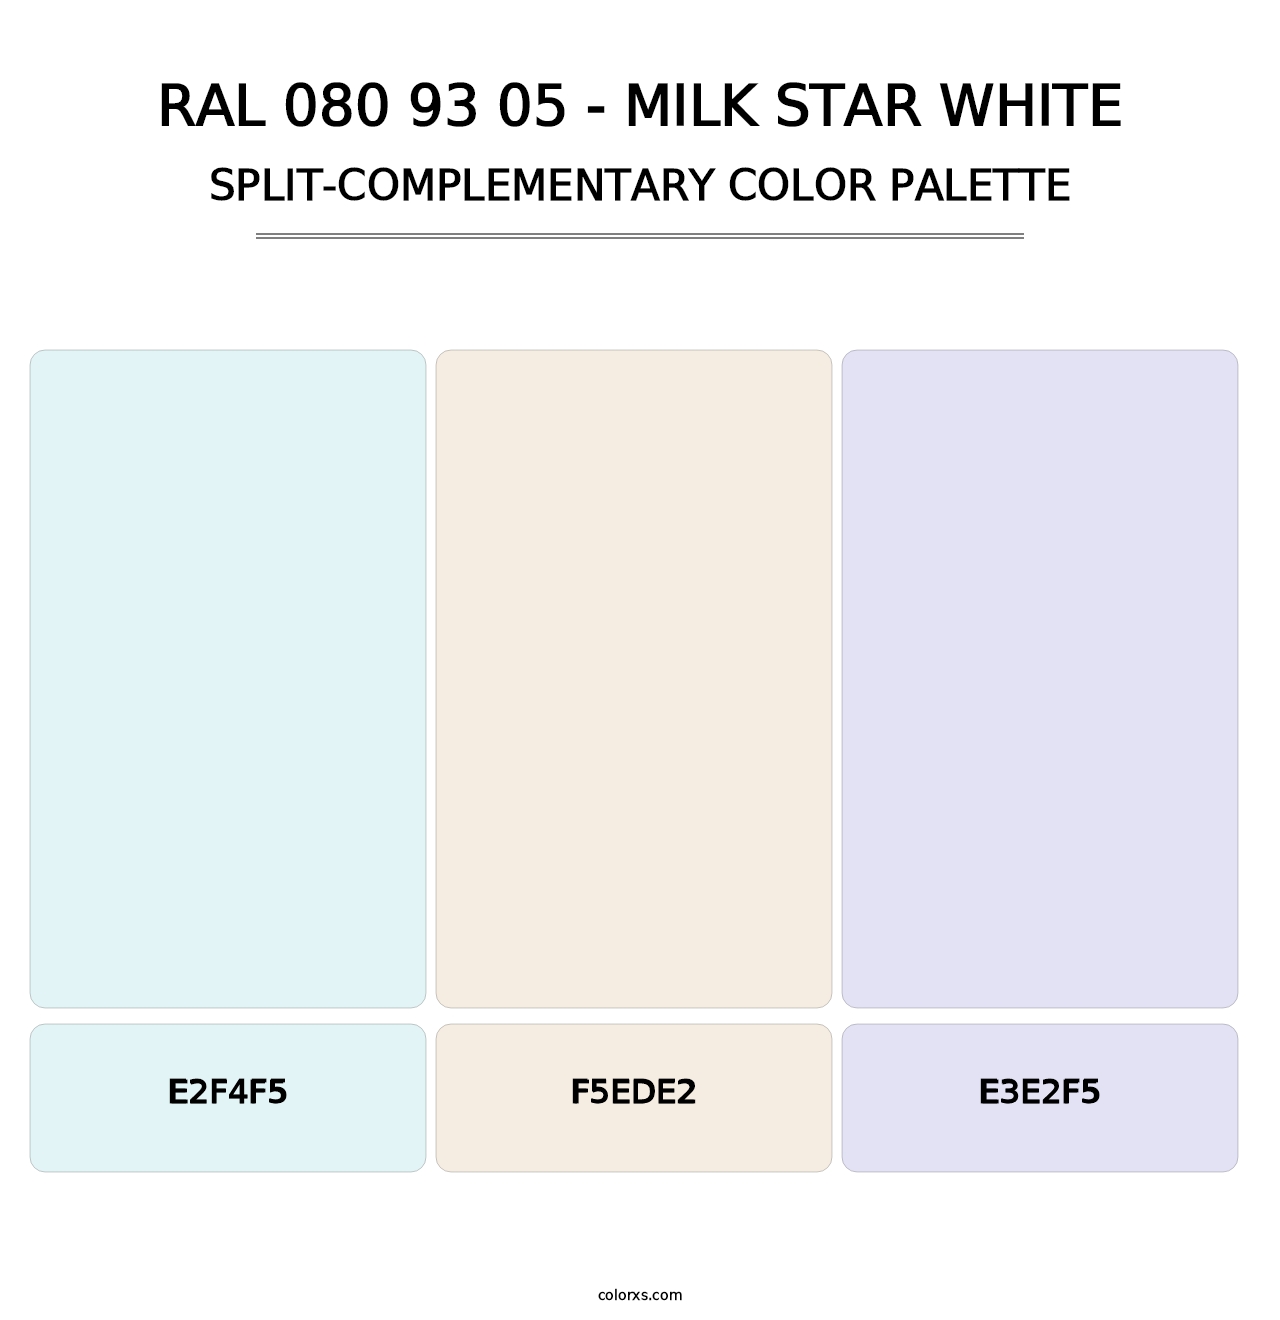 RAL 080 93 05 - Milk Star White - Split-Complementary Color Palette